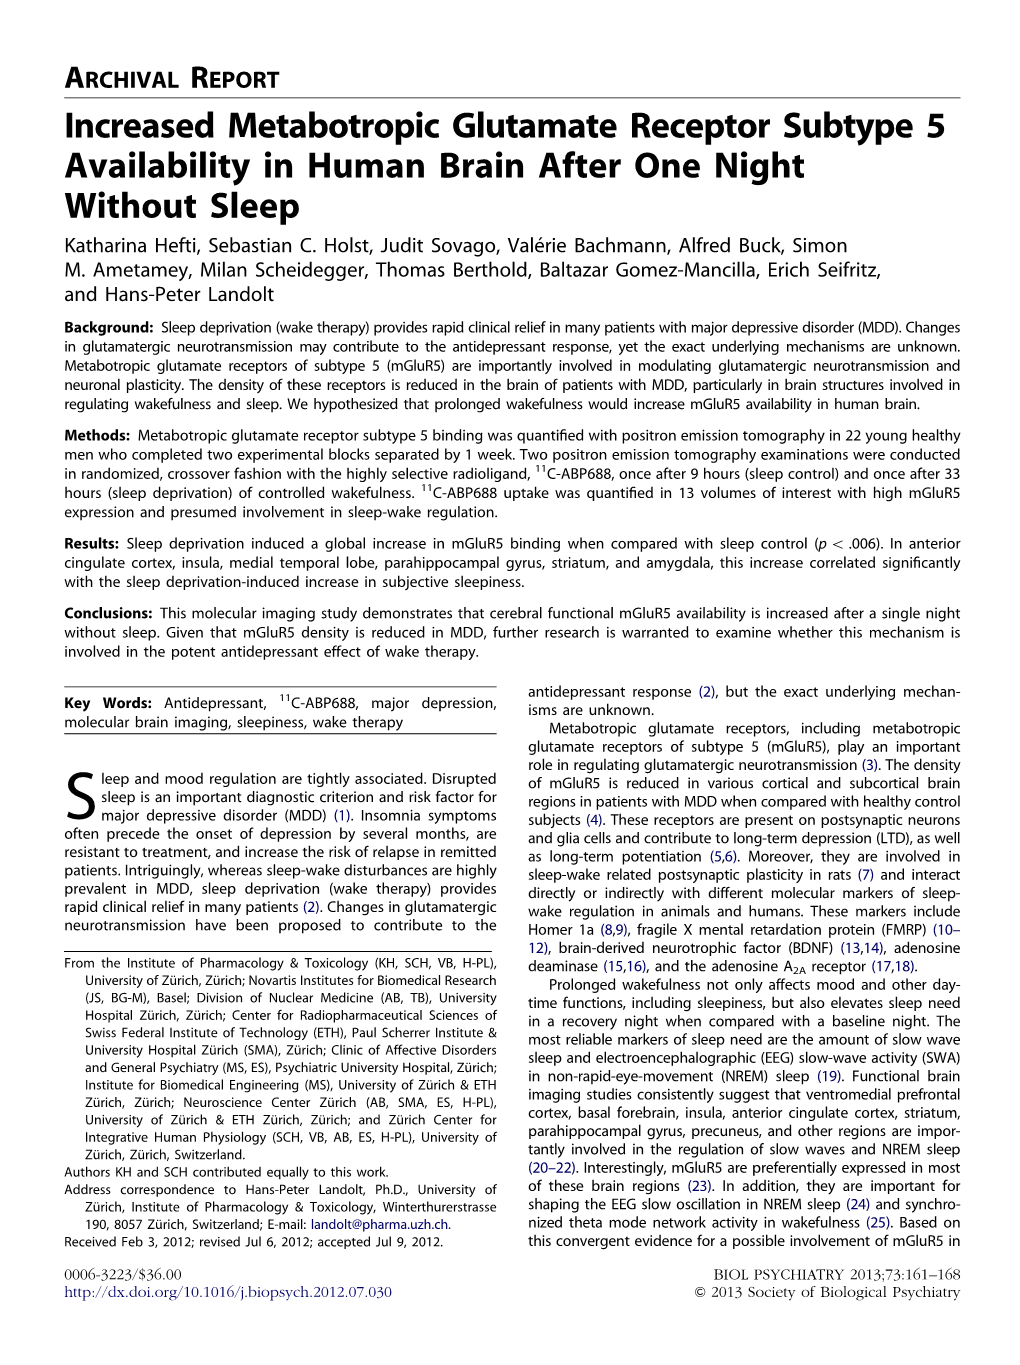 Increased Metabotropic Glutamate Receptor Subtype 5 Availability in Human Brain After One Night Without Sleep Katharina Hefti, Sebastian C